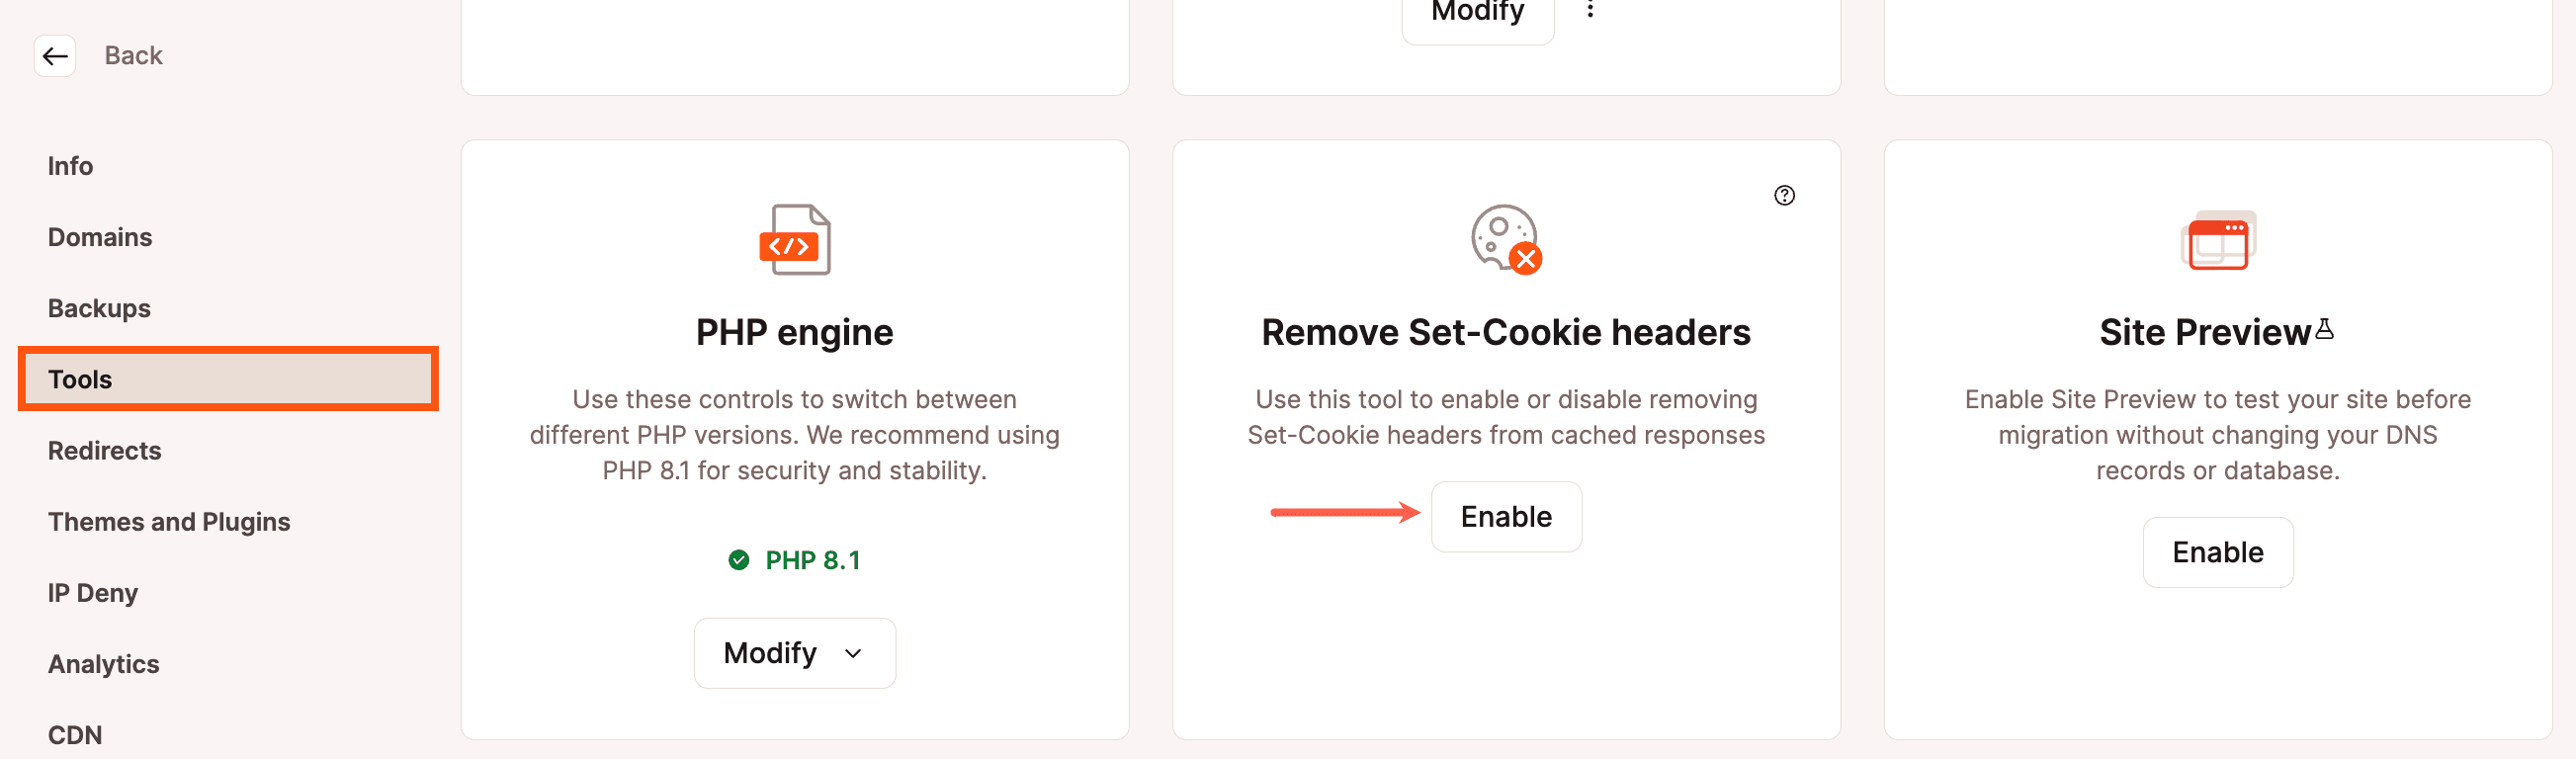 Enable or disable Remove Set-Cookie headers in MyKinsta.